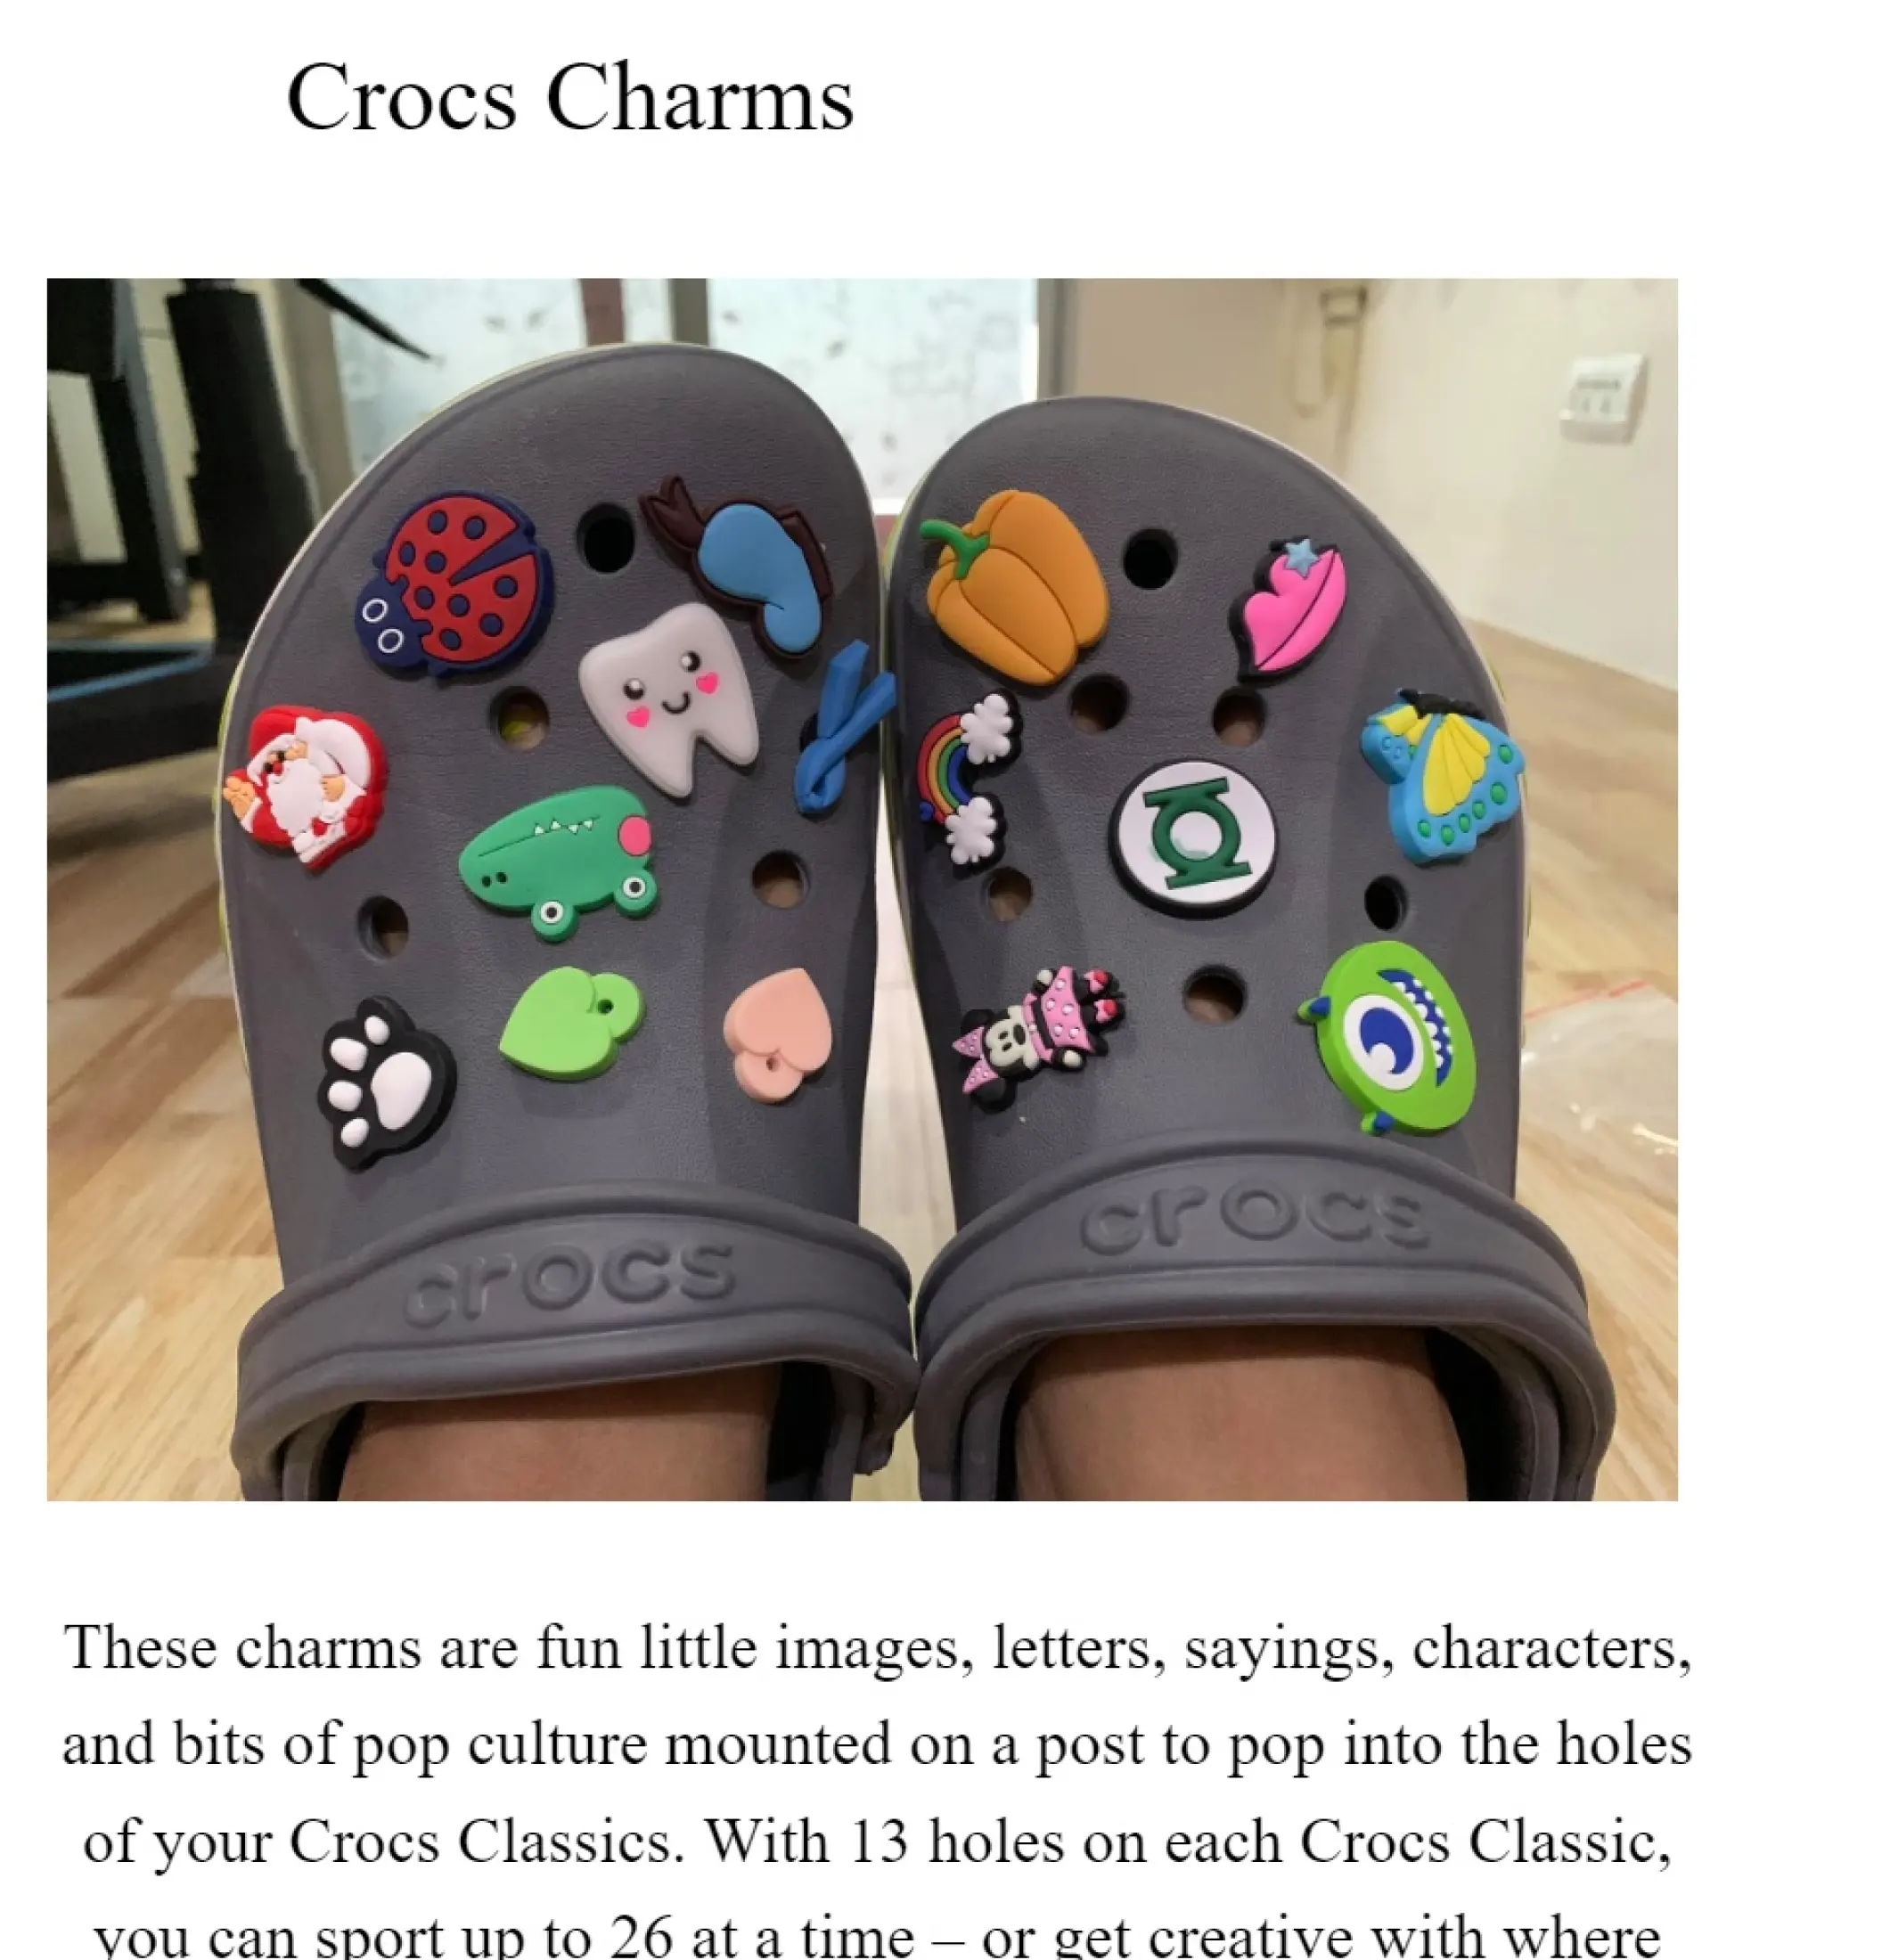 pride croc charms